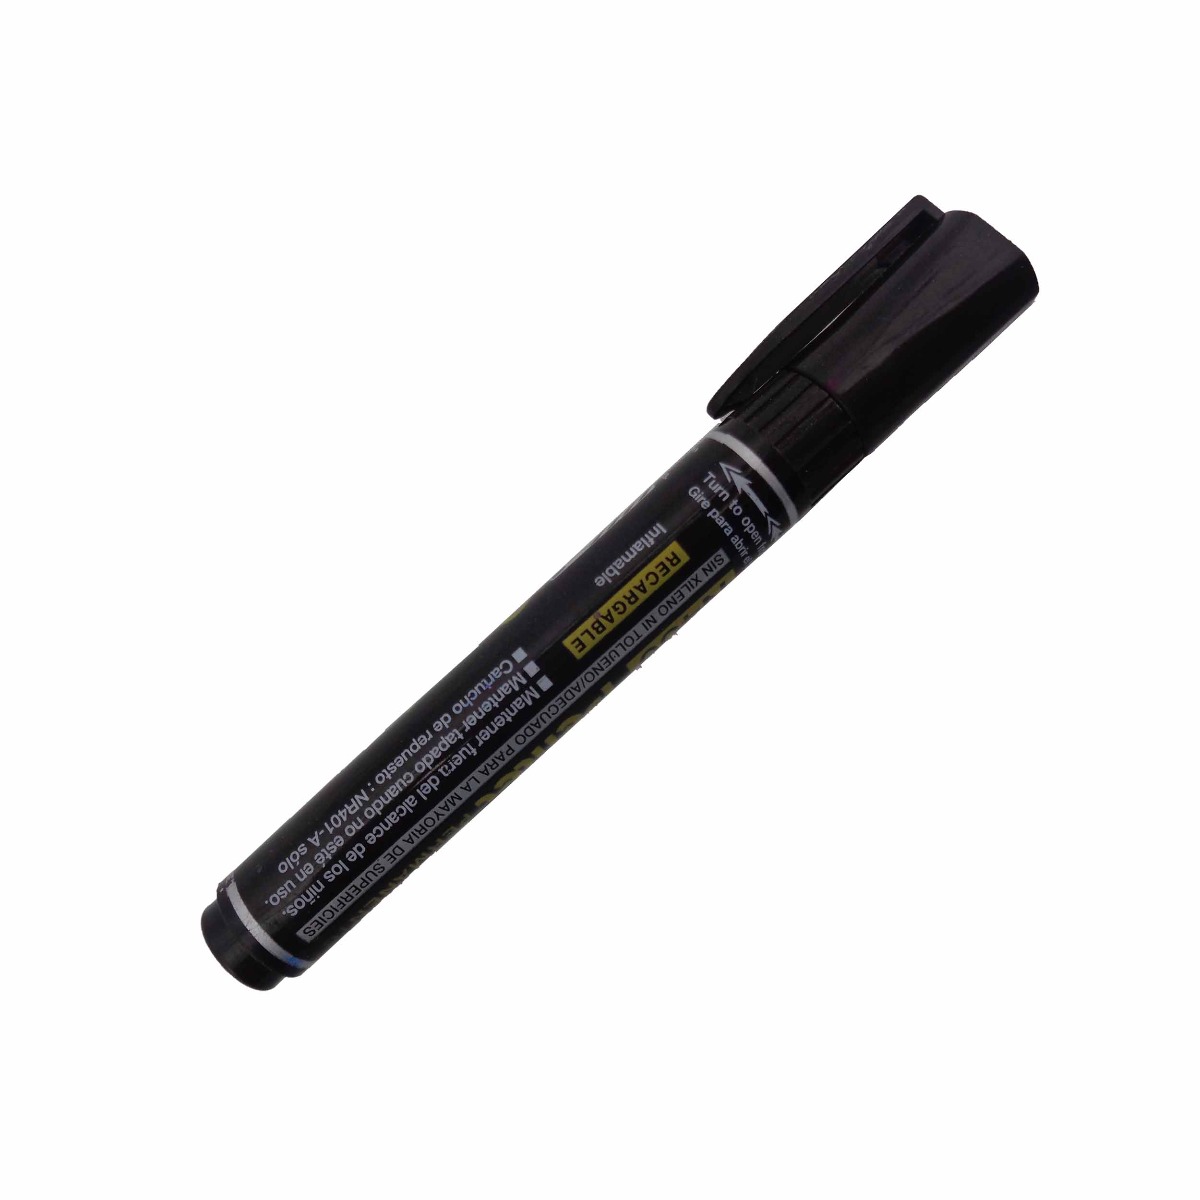 Pentel N450 Model: 15525  Black Color Permanent Marker With Cap Type